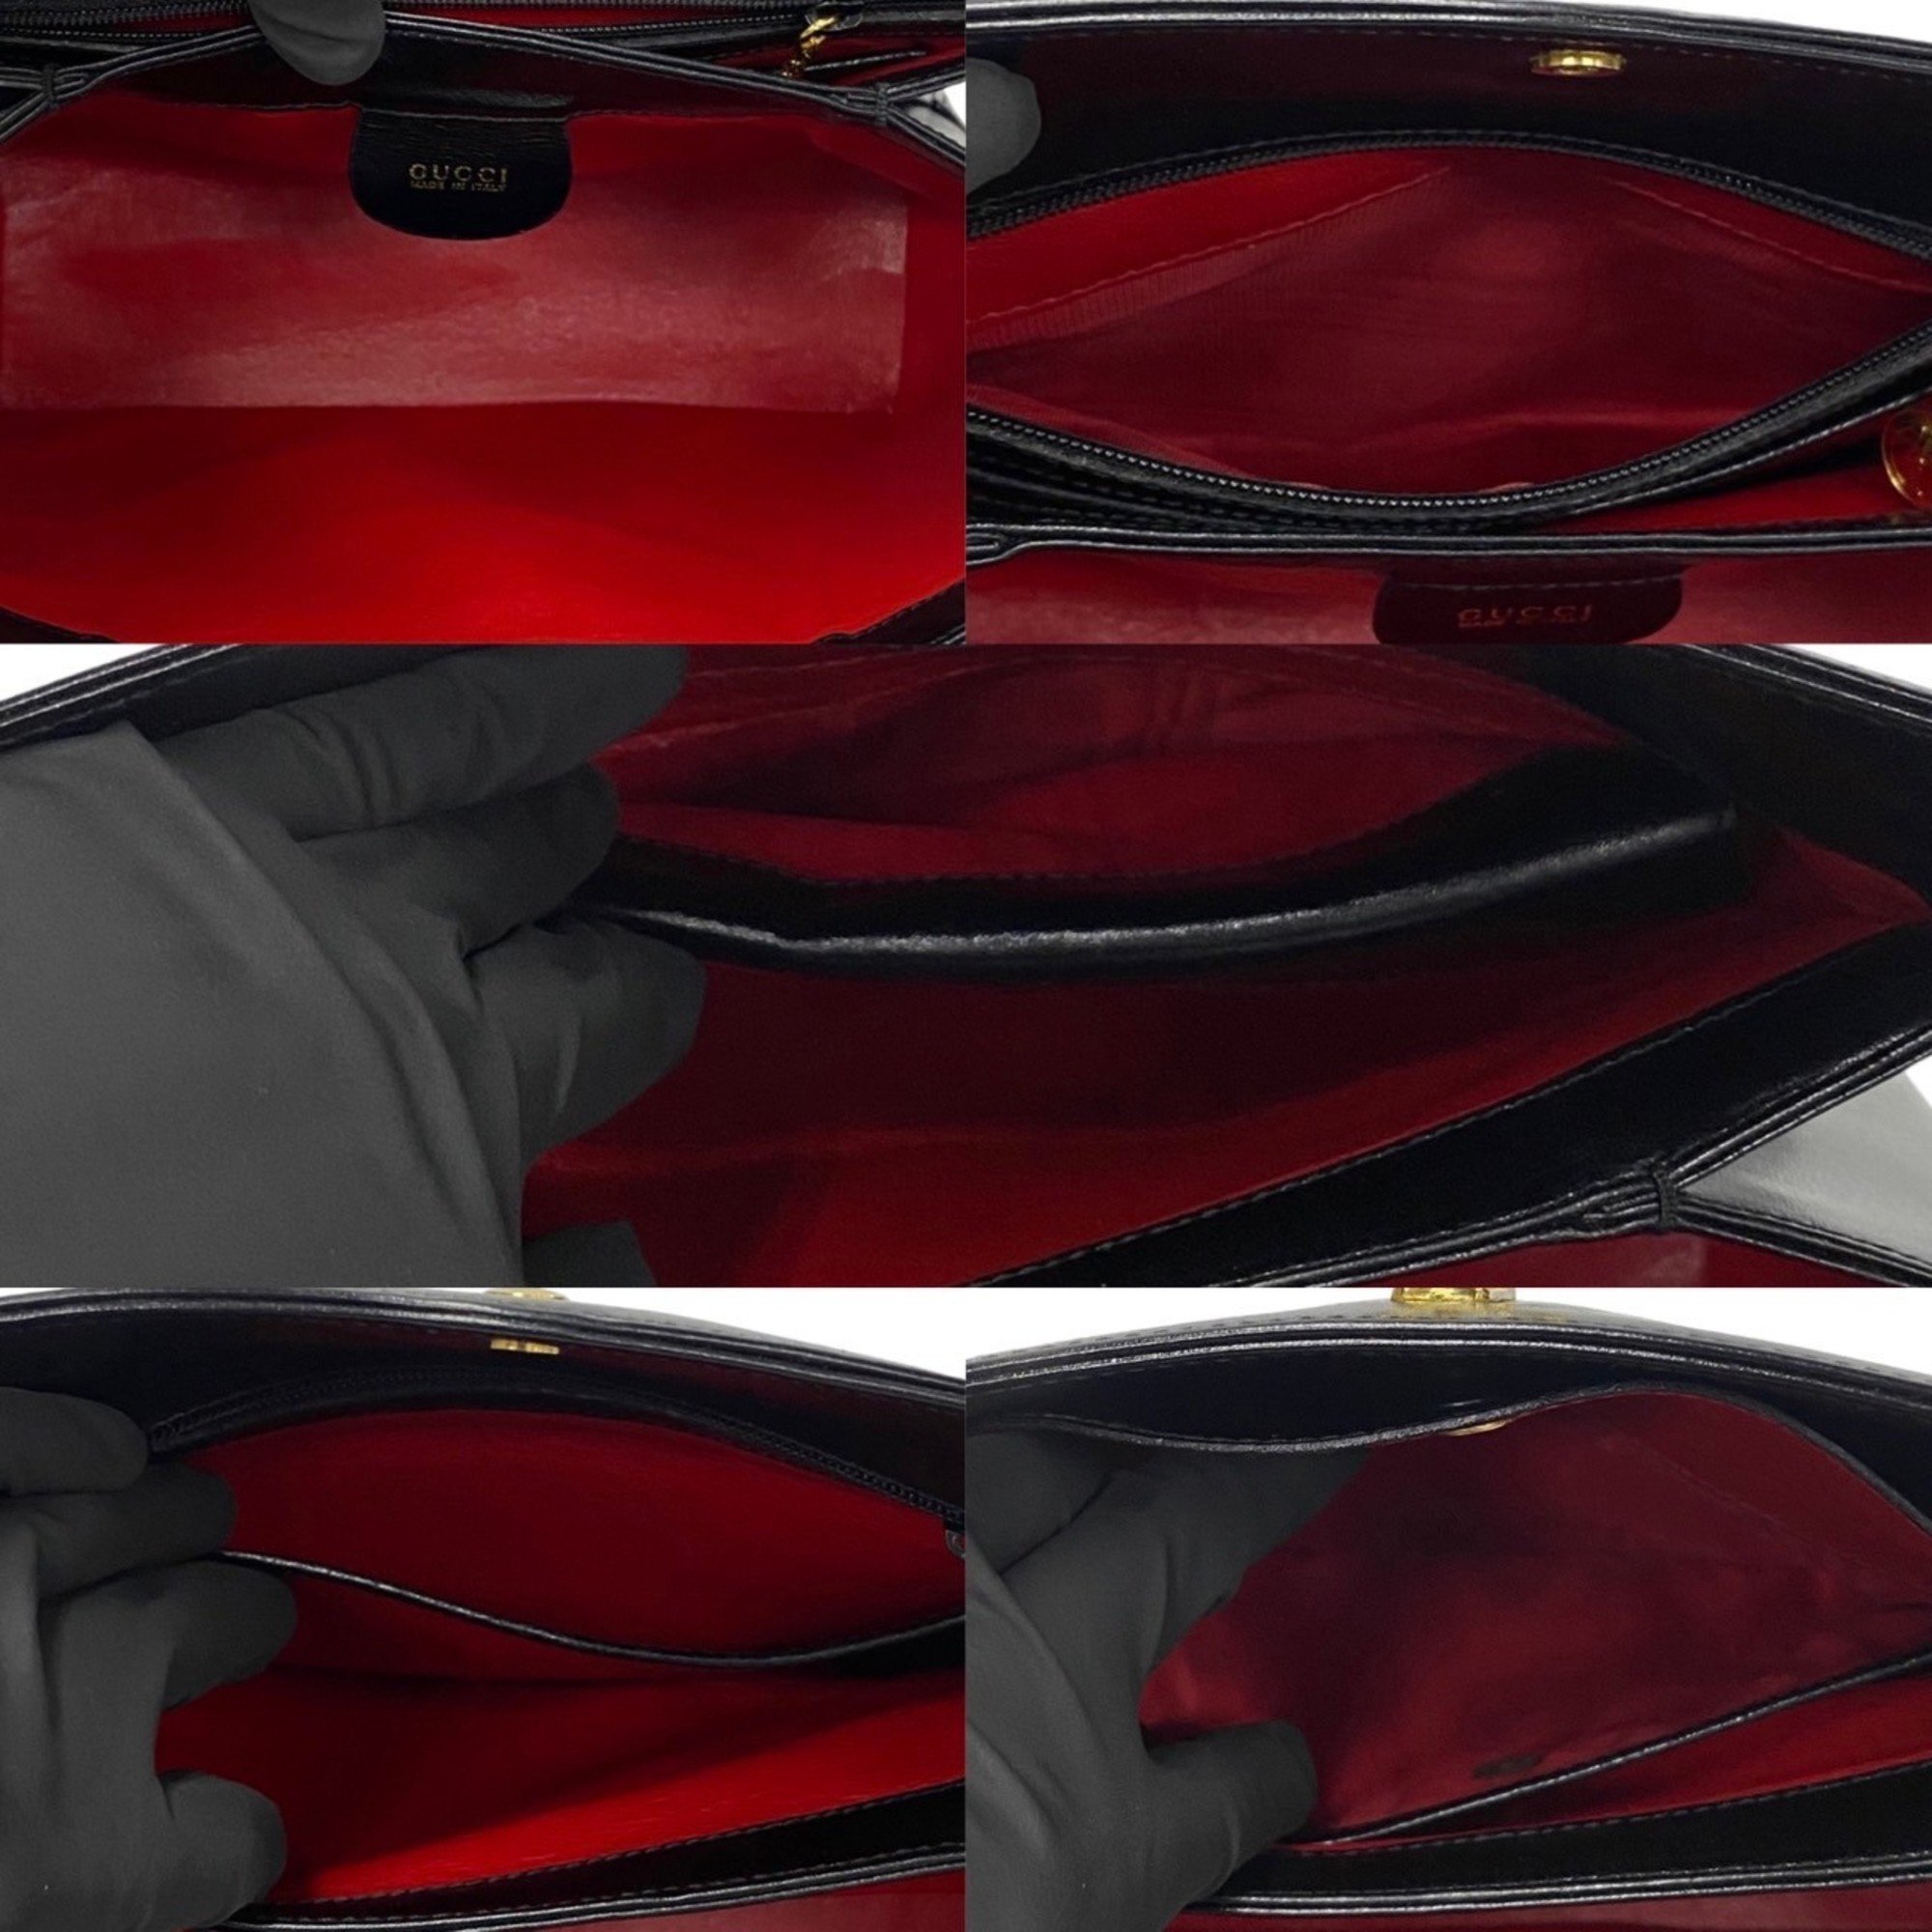 GUCCI Old Gucci Horseshoe Hardware Leather Handbag Tote Bag Black 15144